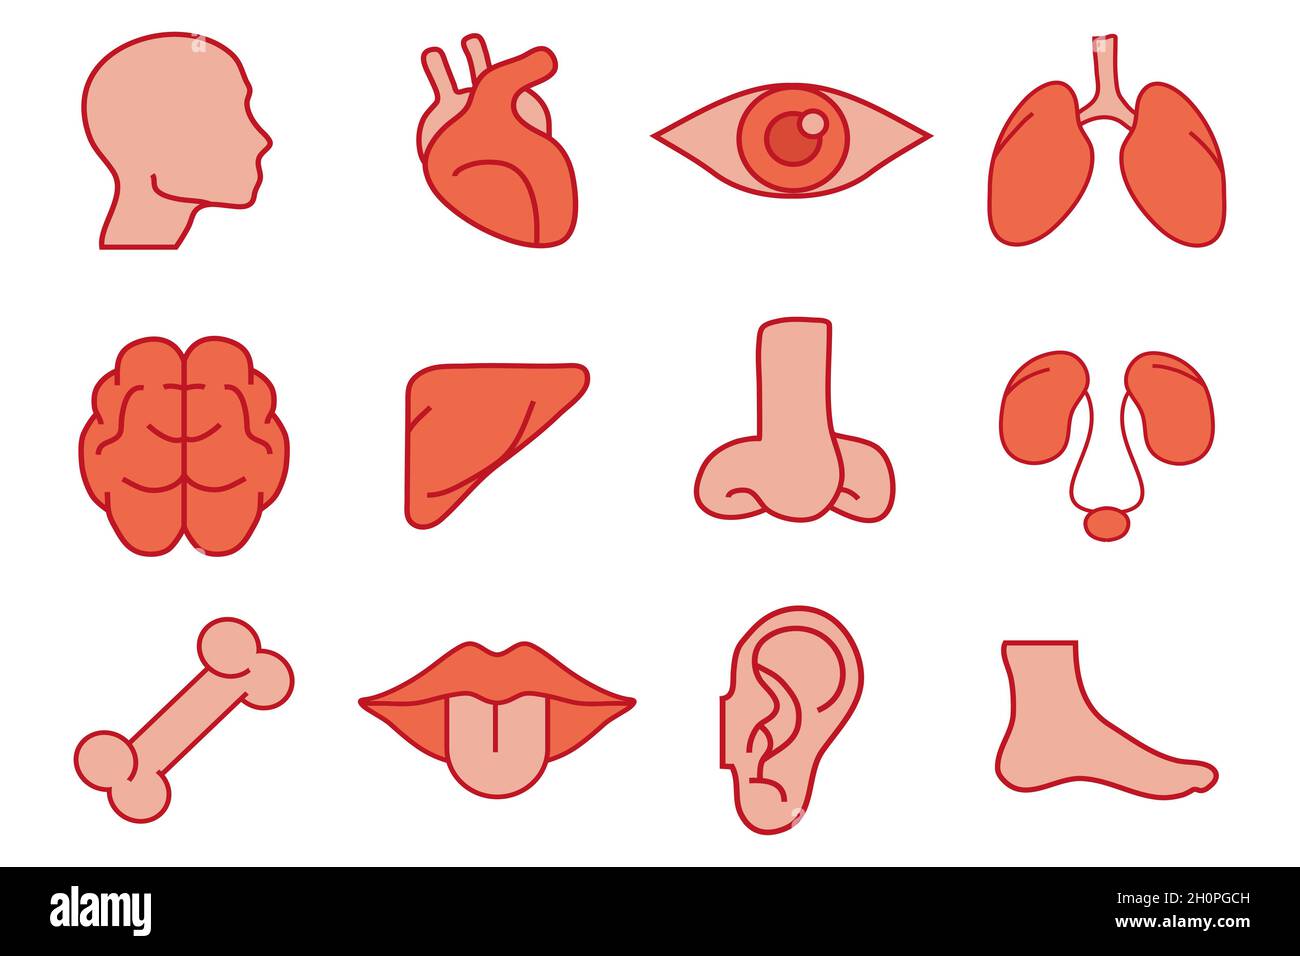 Human Organs Set. Internal organs. Hand drawn - brain, eye, lungs, heart, liver, nose, female reproductive system, leg, mouth, ear, bone. Human biolog Stock Vector